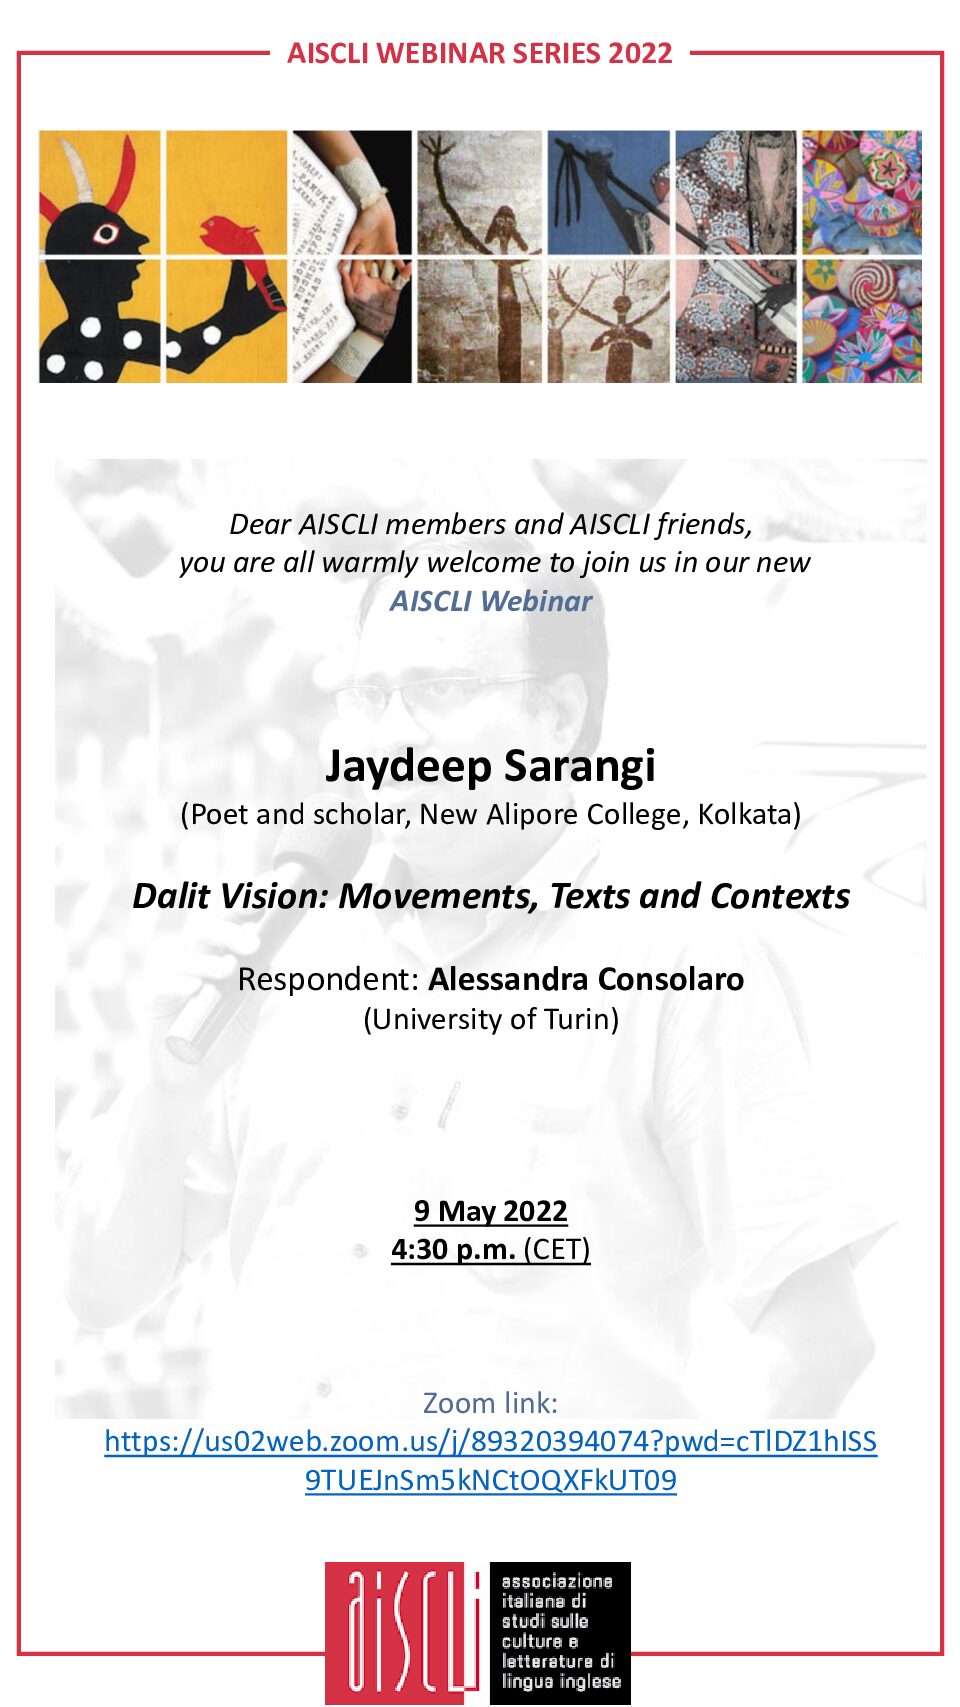 AISCLI WEBINAR SERIES 2022: Jaydeep Sarangy